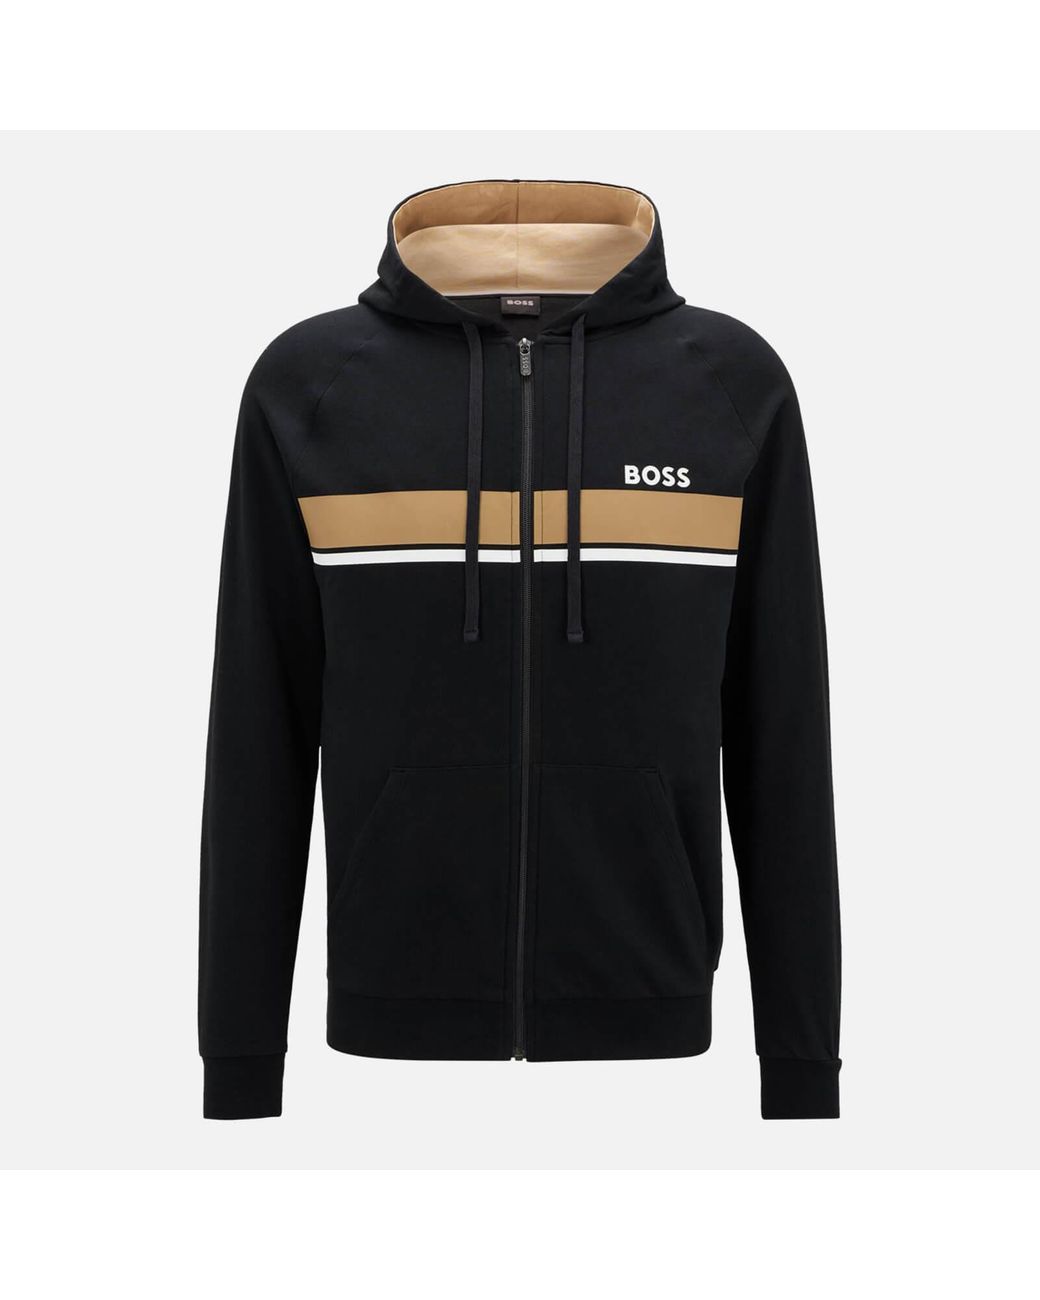 BOSS by HUGO BOSS Bodywear Authentic Logo-printed Hooded Cotton Jacket in  Black for Men | Lyst